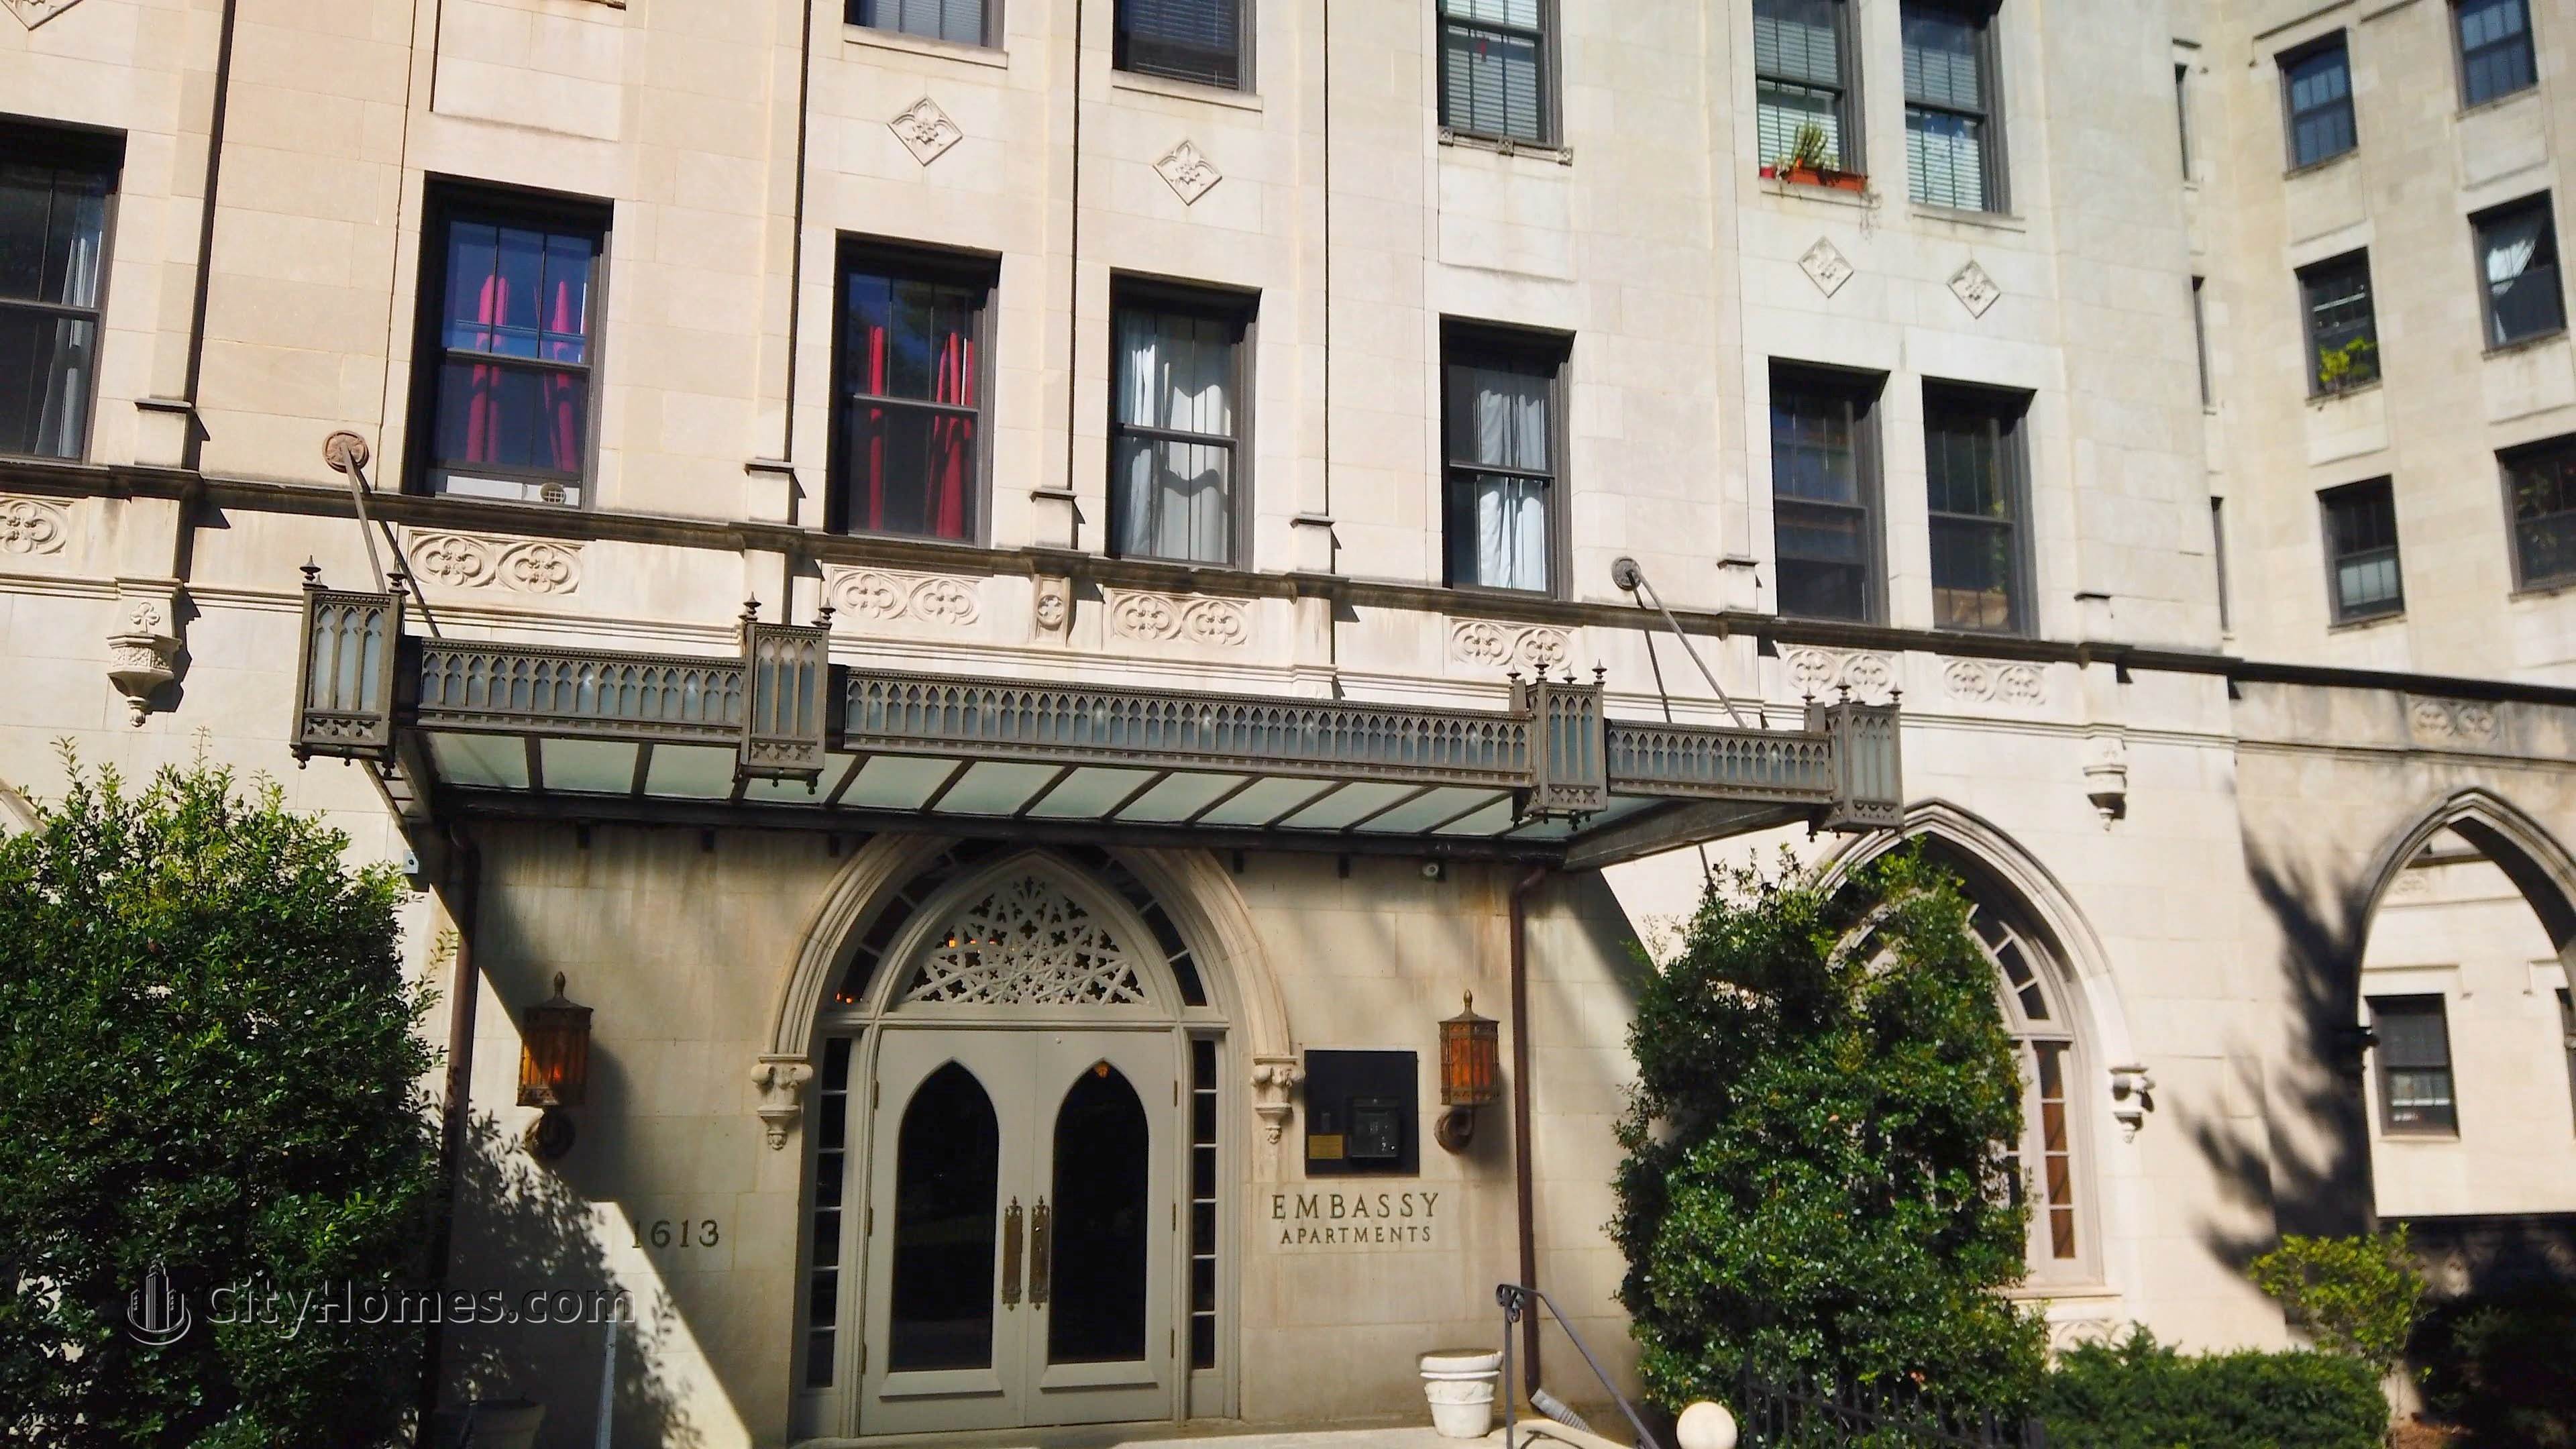 The Embassy建於 1613 Harvard St NW, Mount Pleasant, Washington, DC 20009